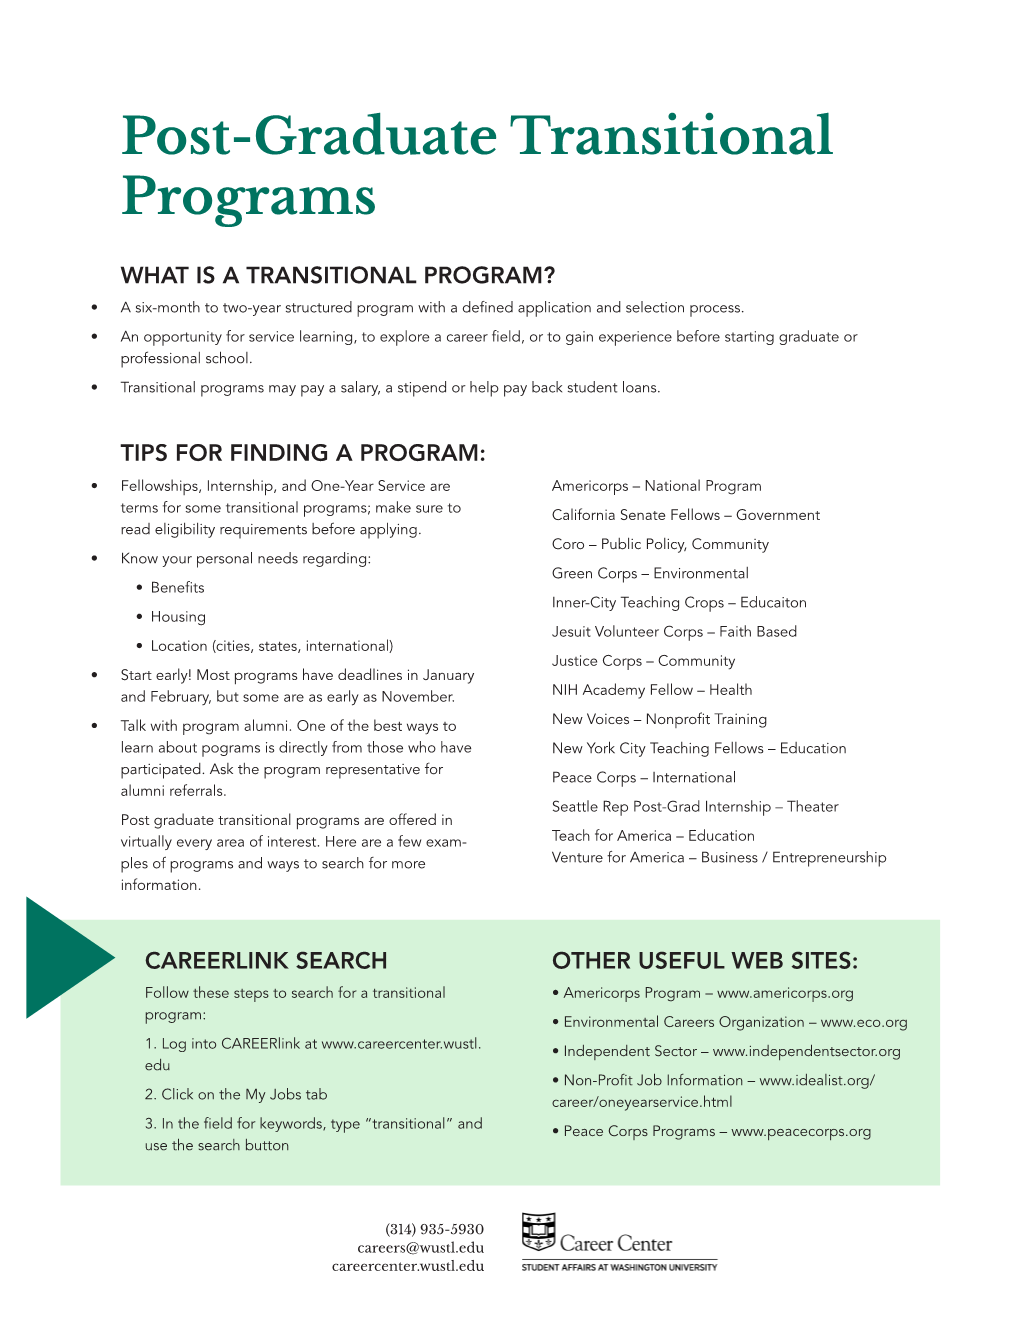 Post-Graduate Transitional Programs